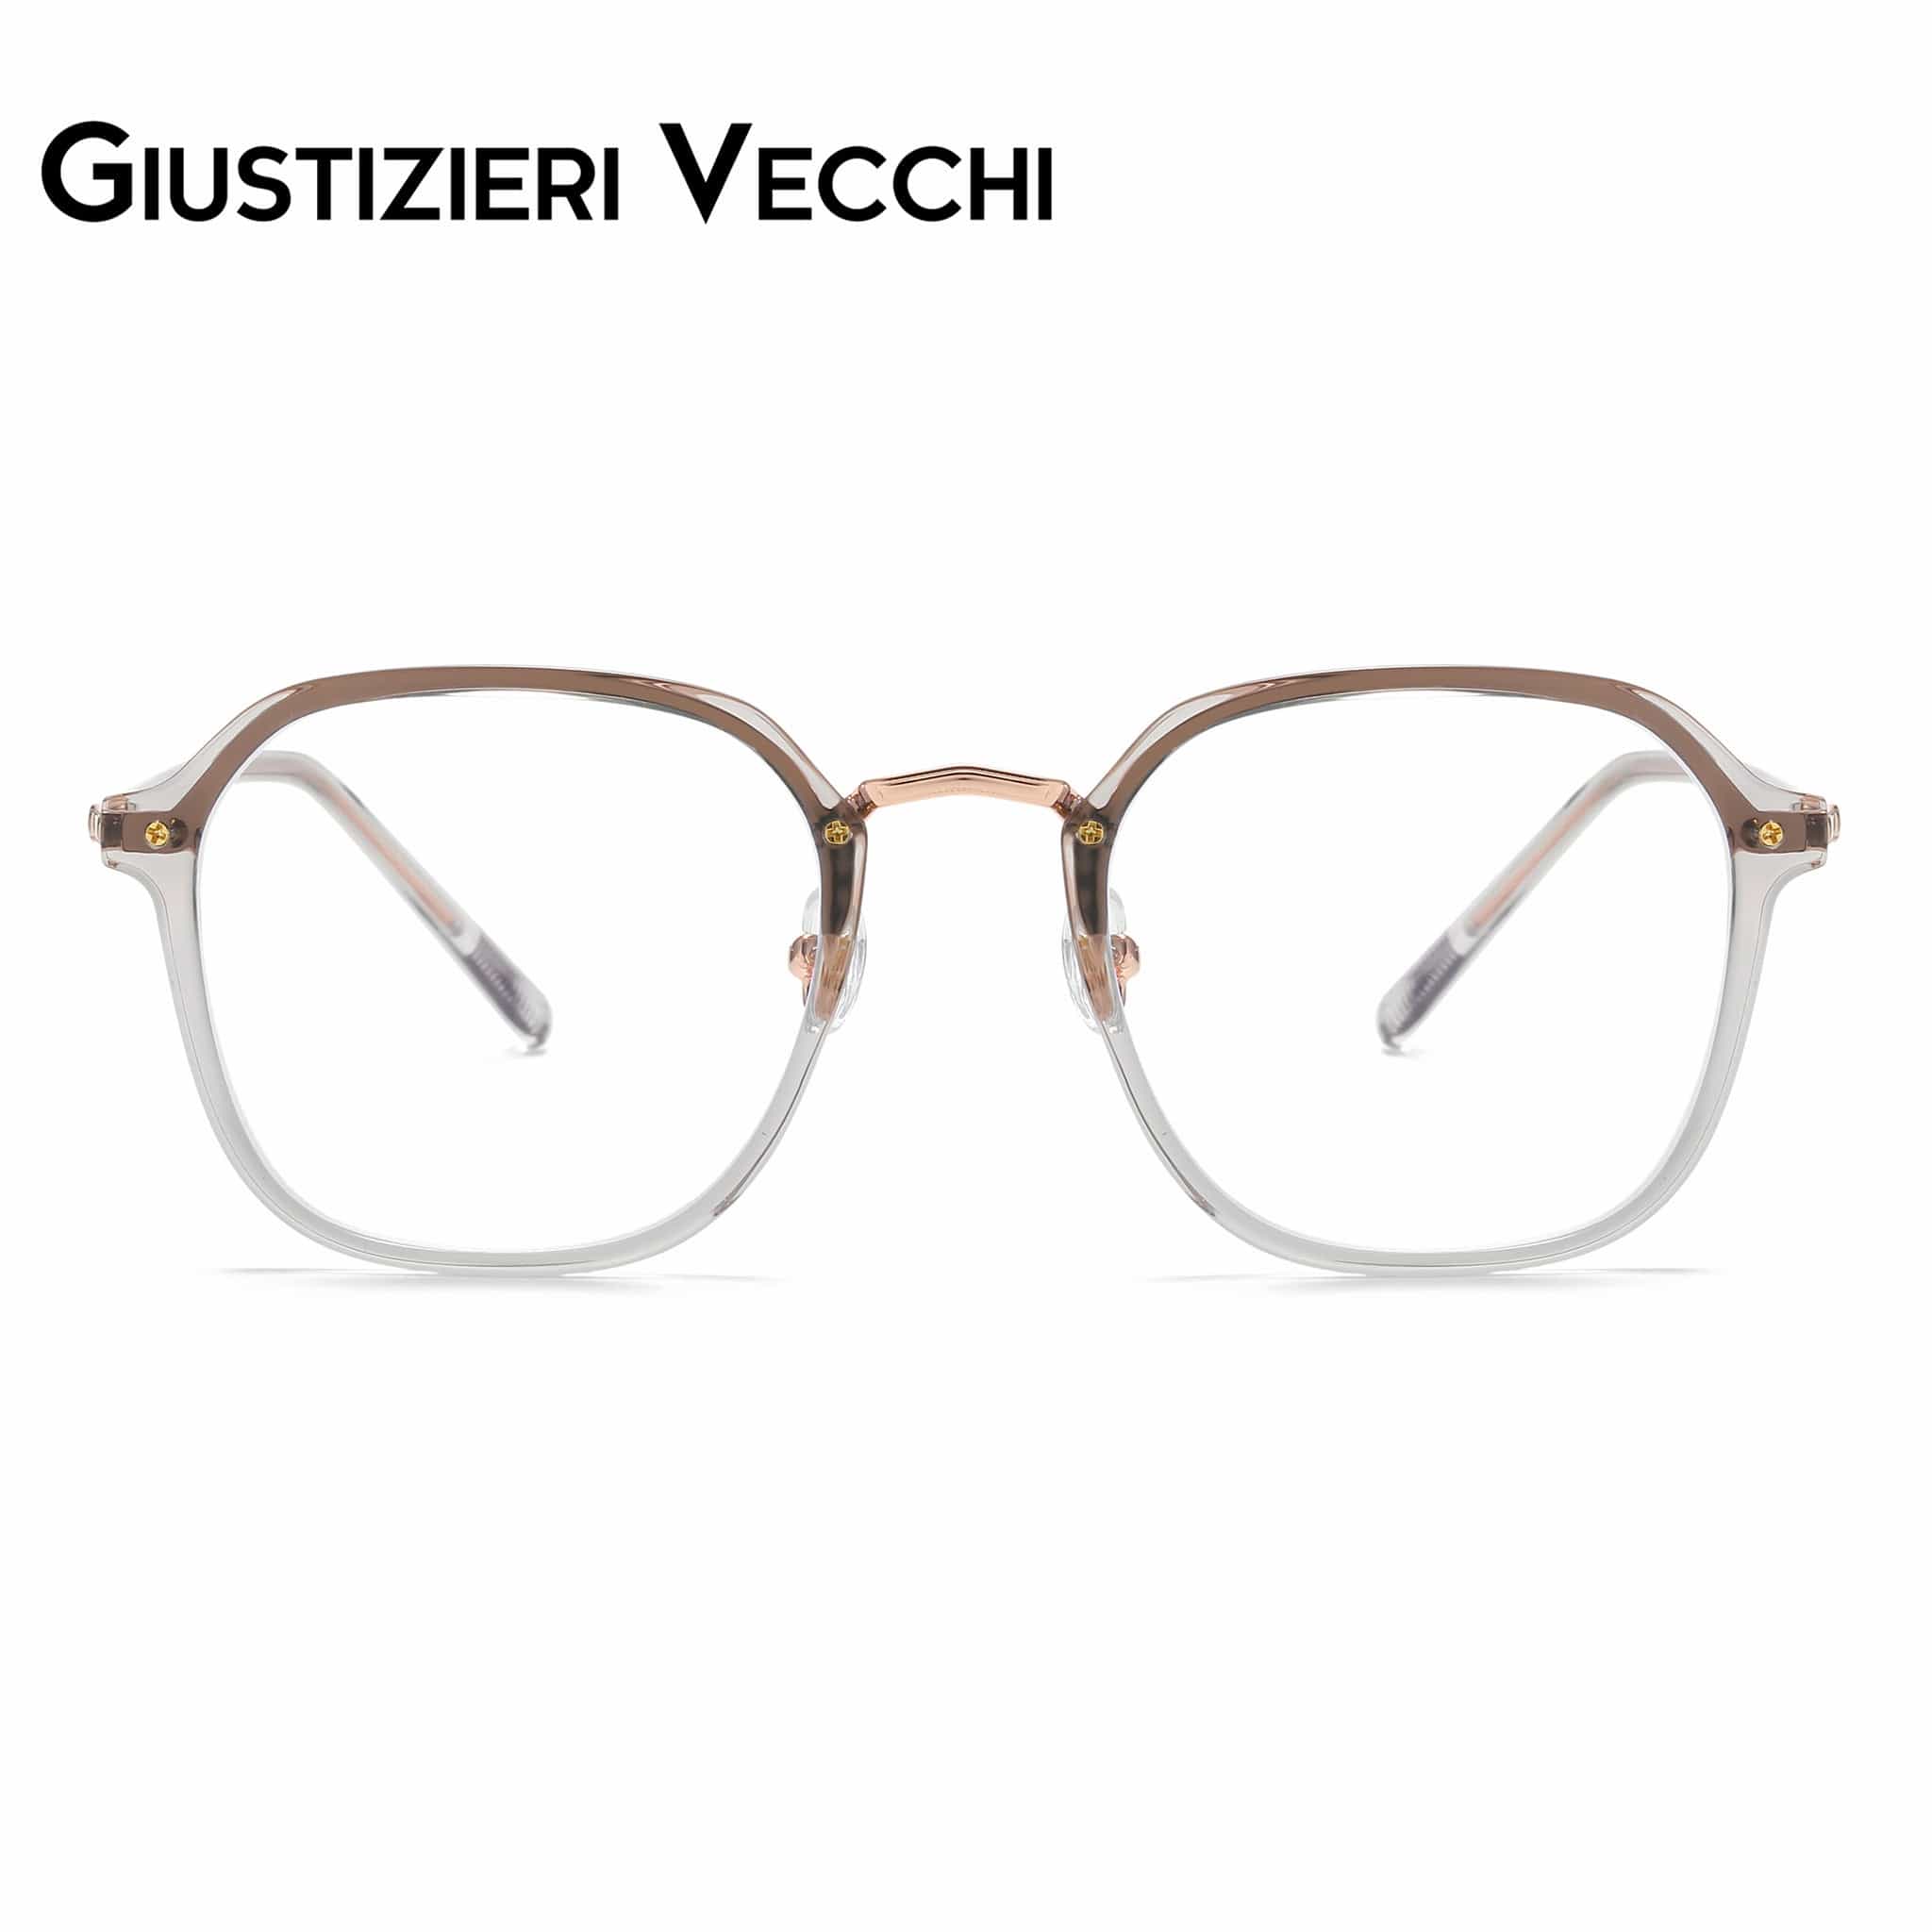 GIUSTIZIERI VECCHI Eyeglasses Small / Reddish Grey Crystal ModaChic Duo